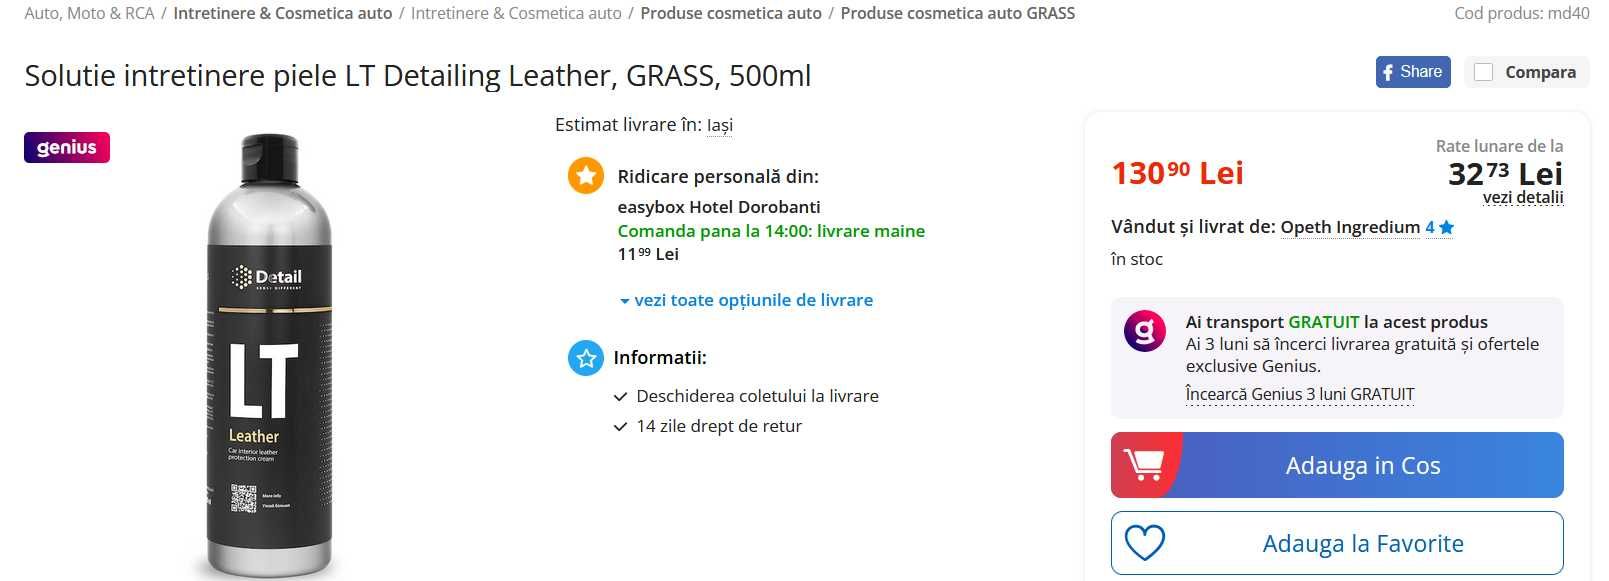 Solutie intretinere piele LT Detailing Leather, GRASS, 500ml